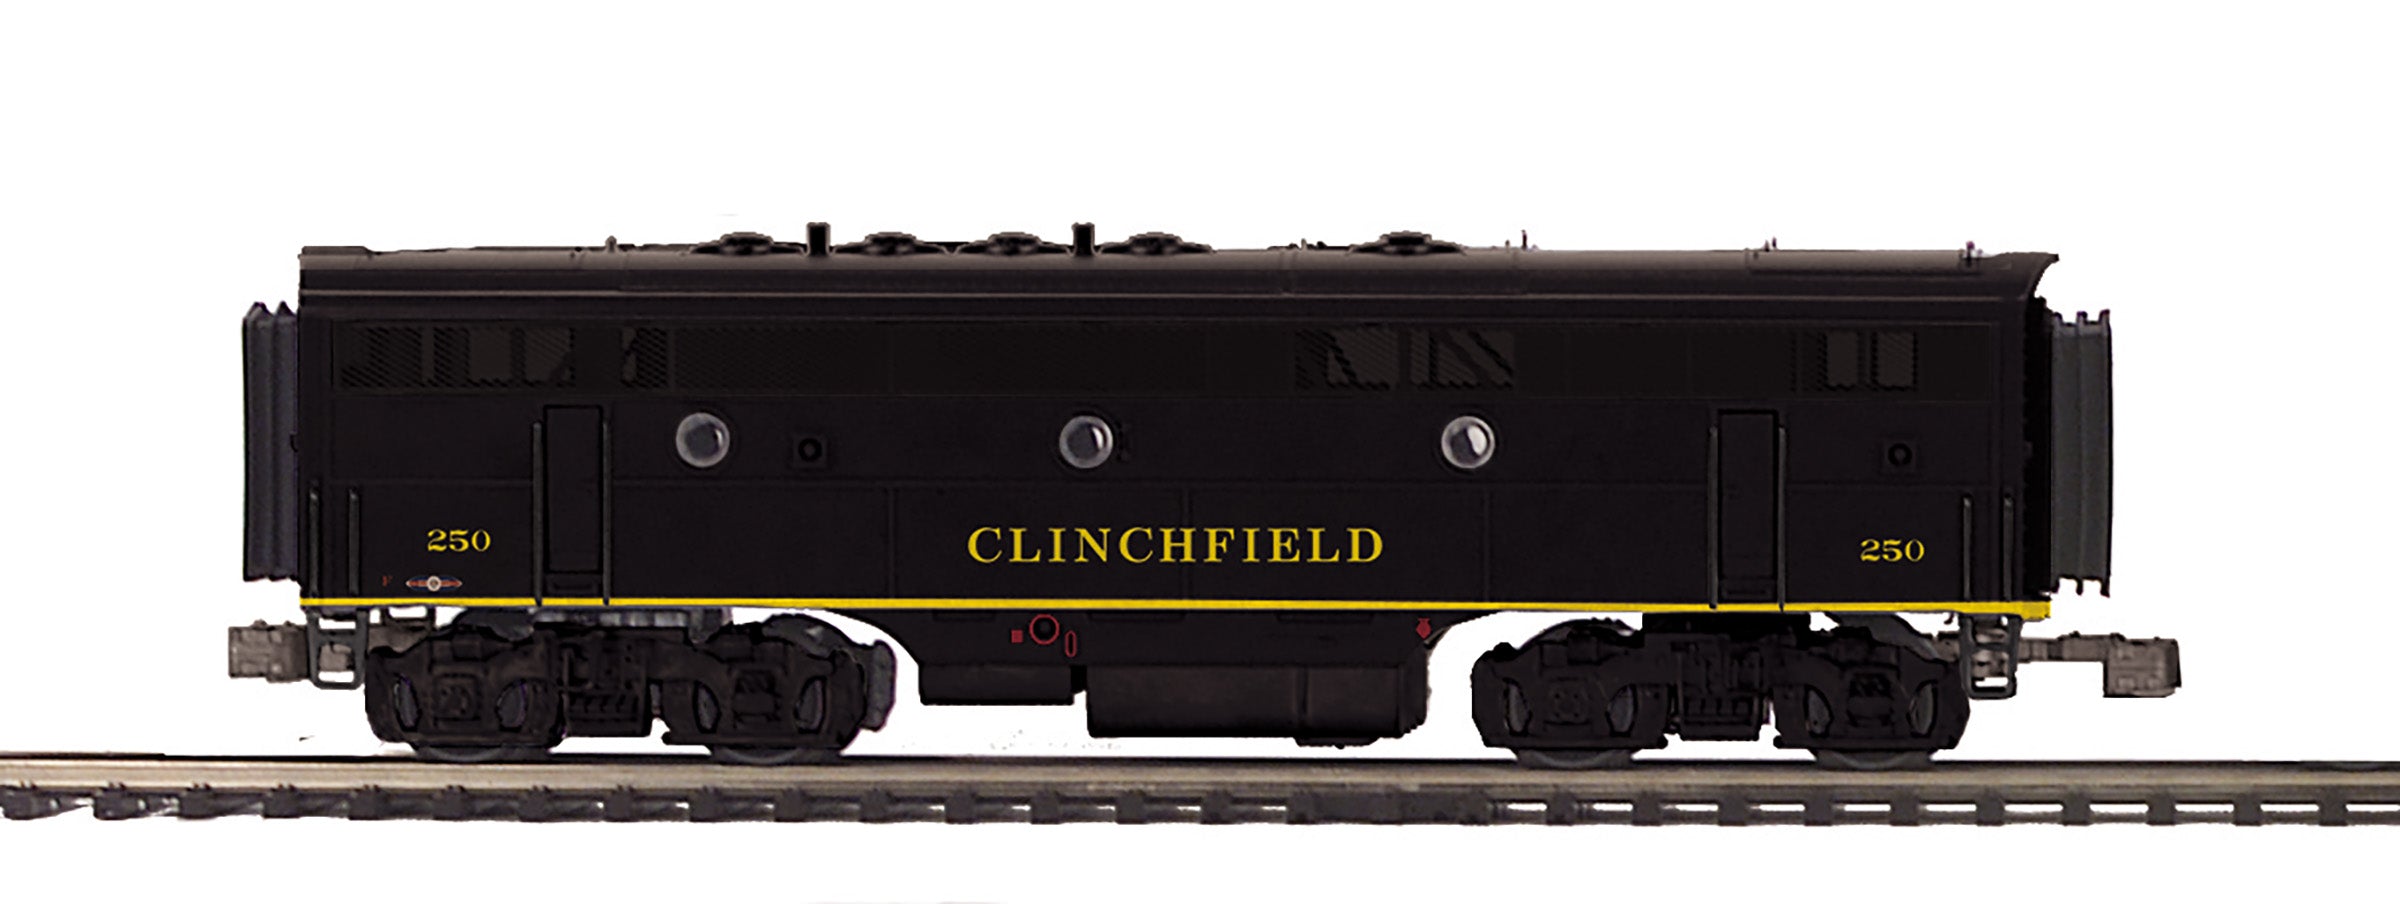 MTH 20-21827-1 - F-7 A/B Diesel Engine Set "Clinchfield" (Black Scheme) w/ PS3 (Hi-Rail Wheels) - Custom Run for MrMuffin'sTrains